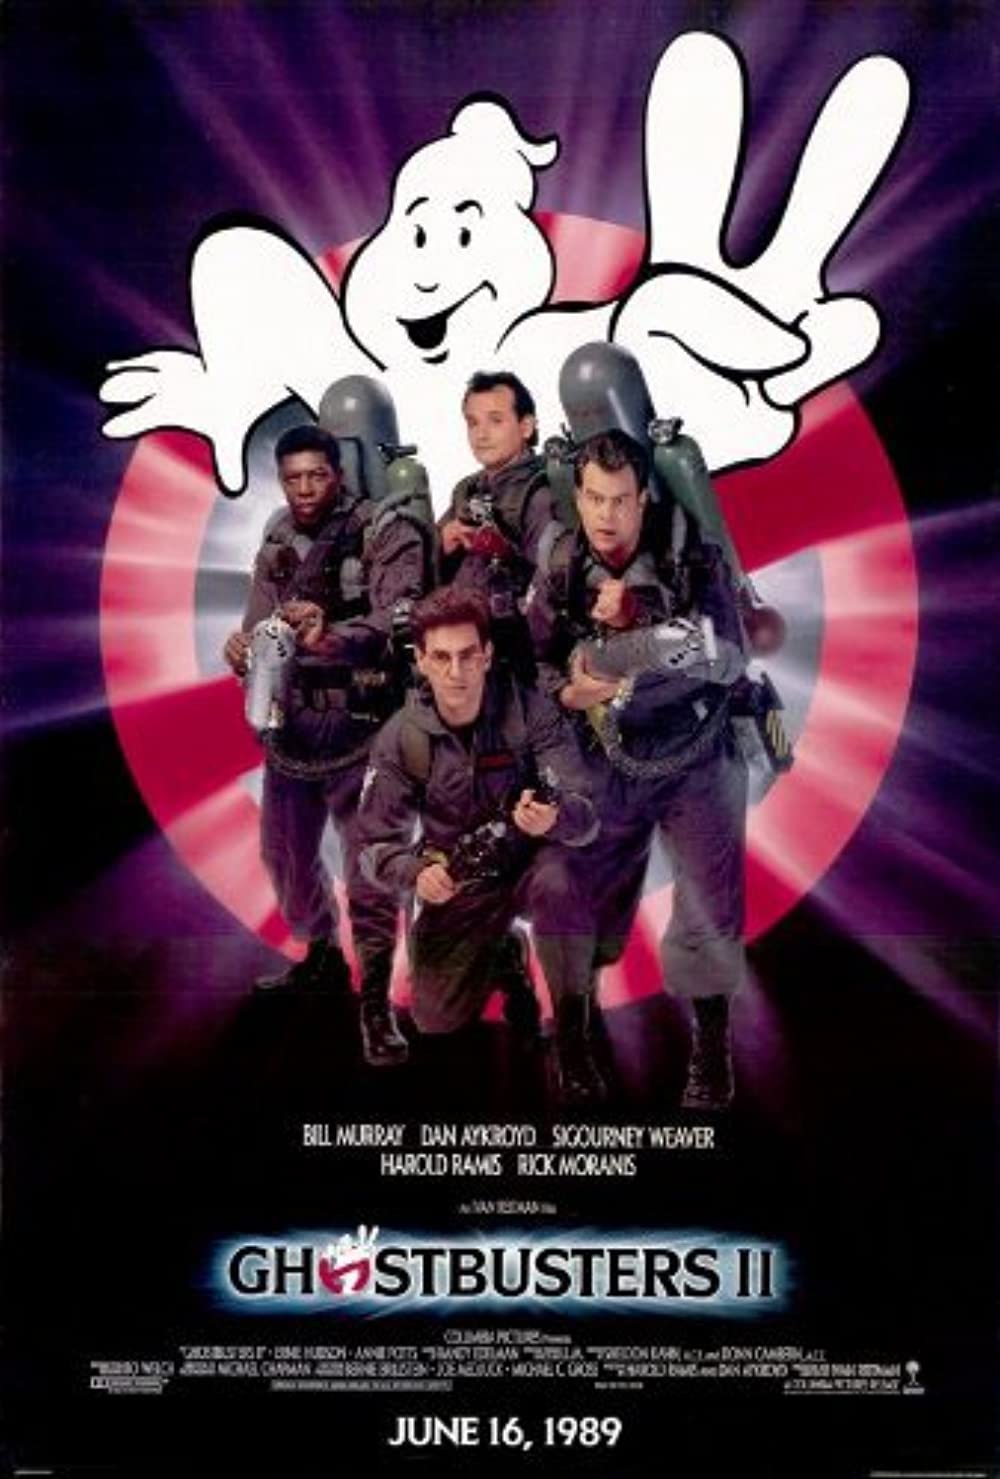 Filmbeschreibung zu Ghostbusters II